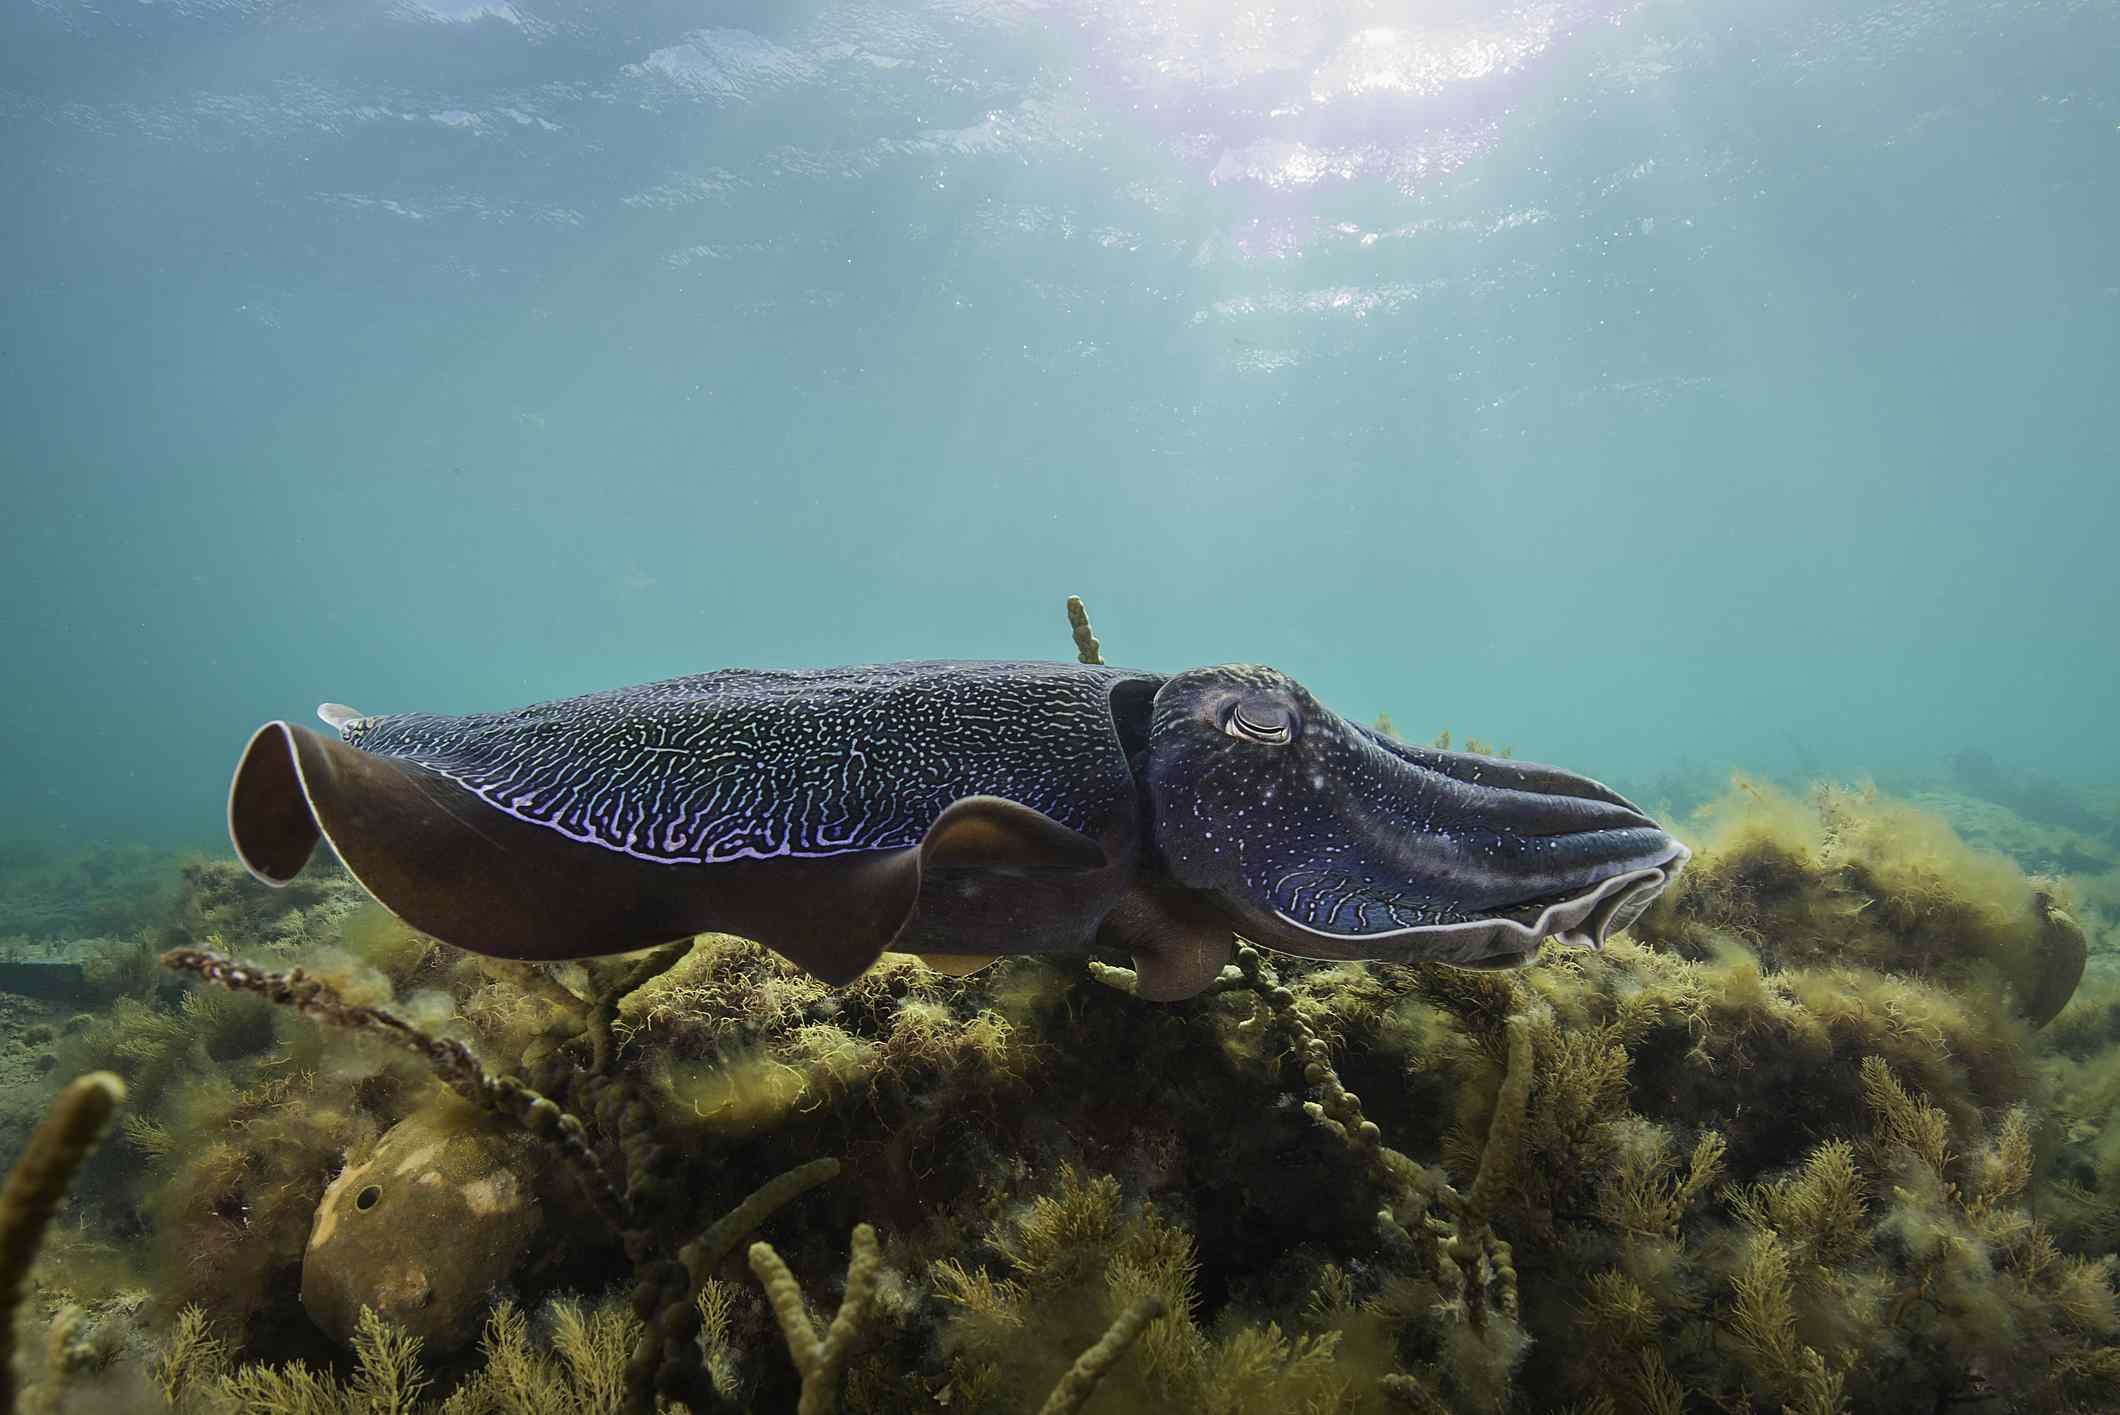 Sepia gigante australiana nadando sobre un lecho de algas